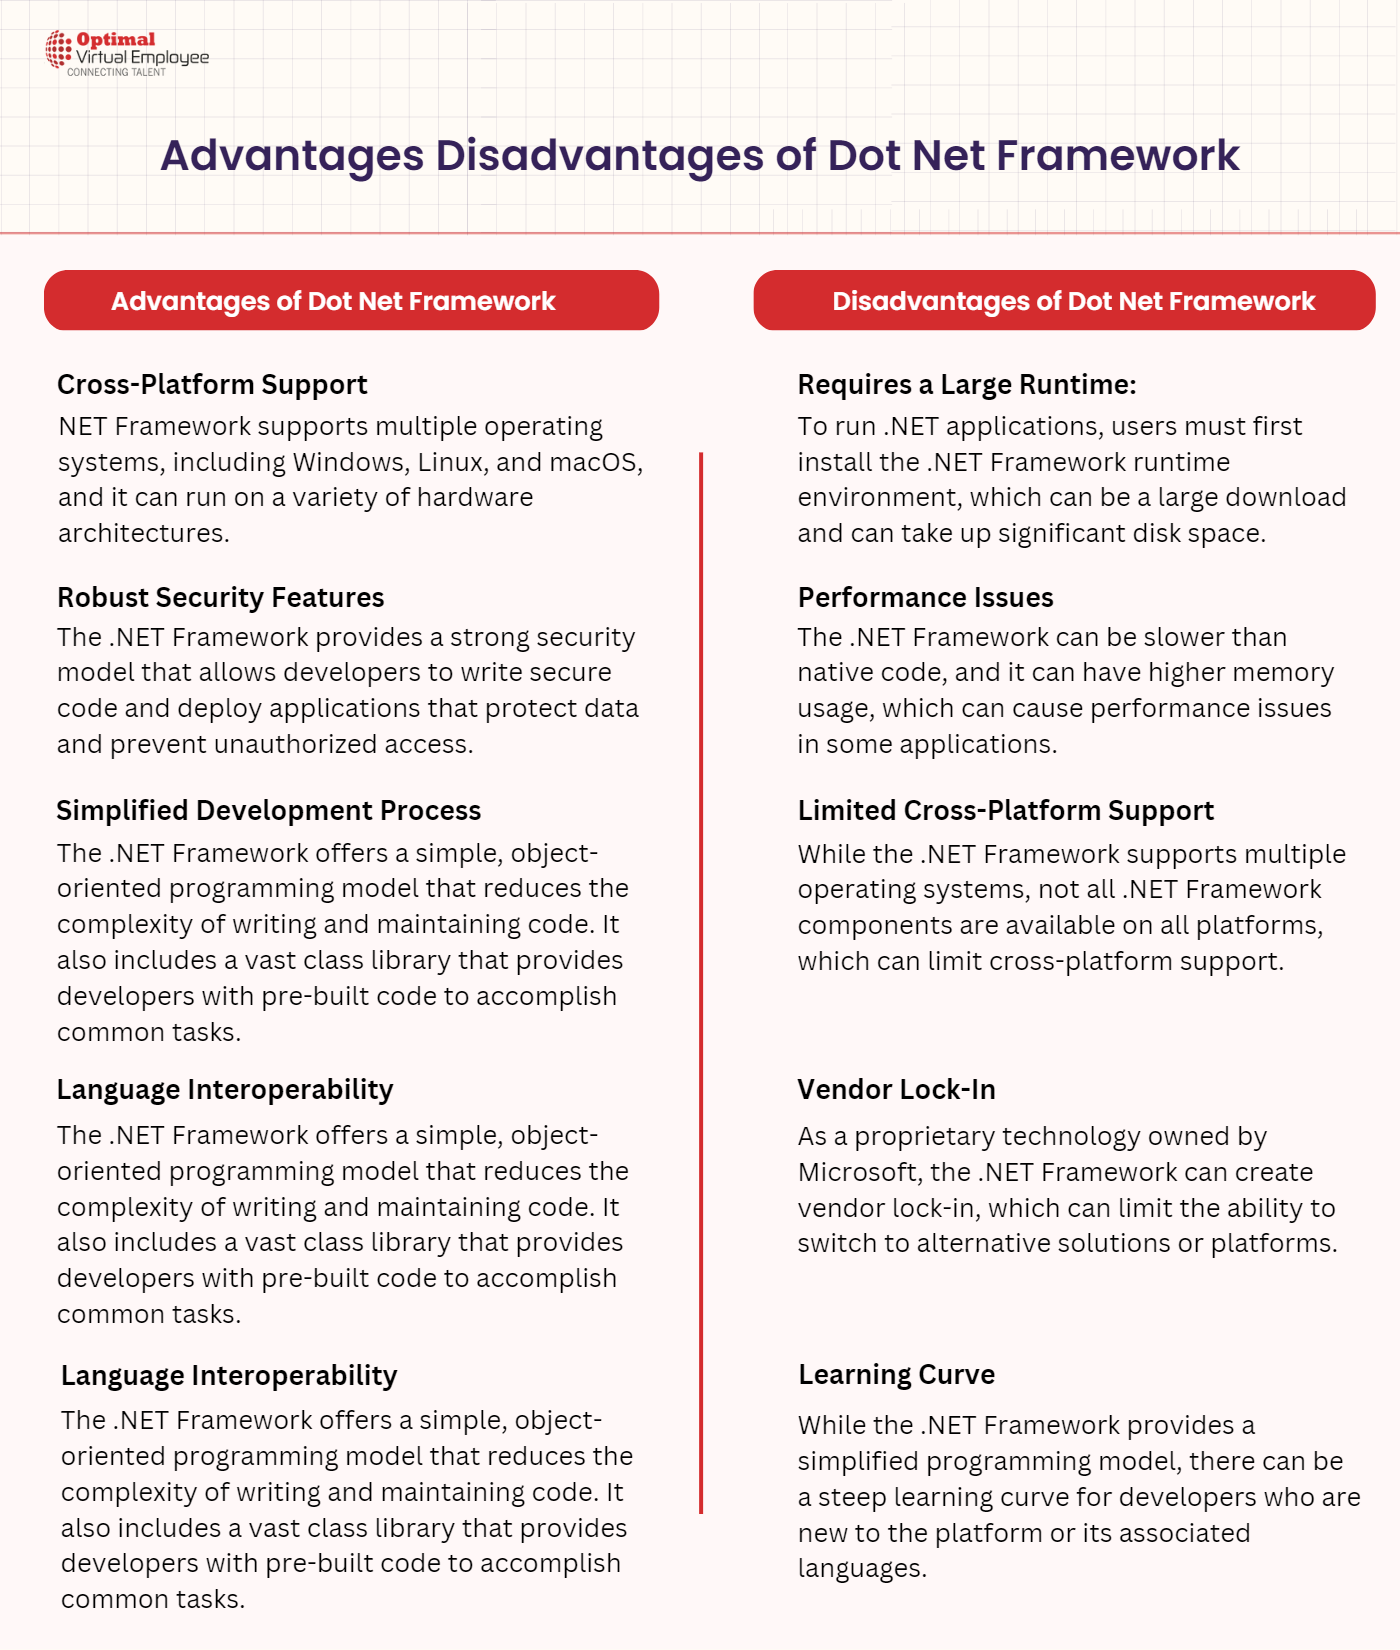 Advantages & Disadvantages of Dot Net Framework